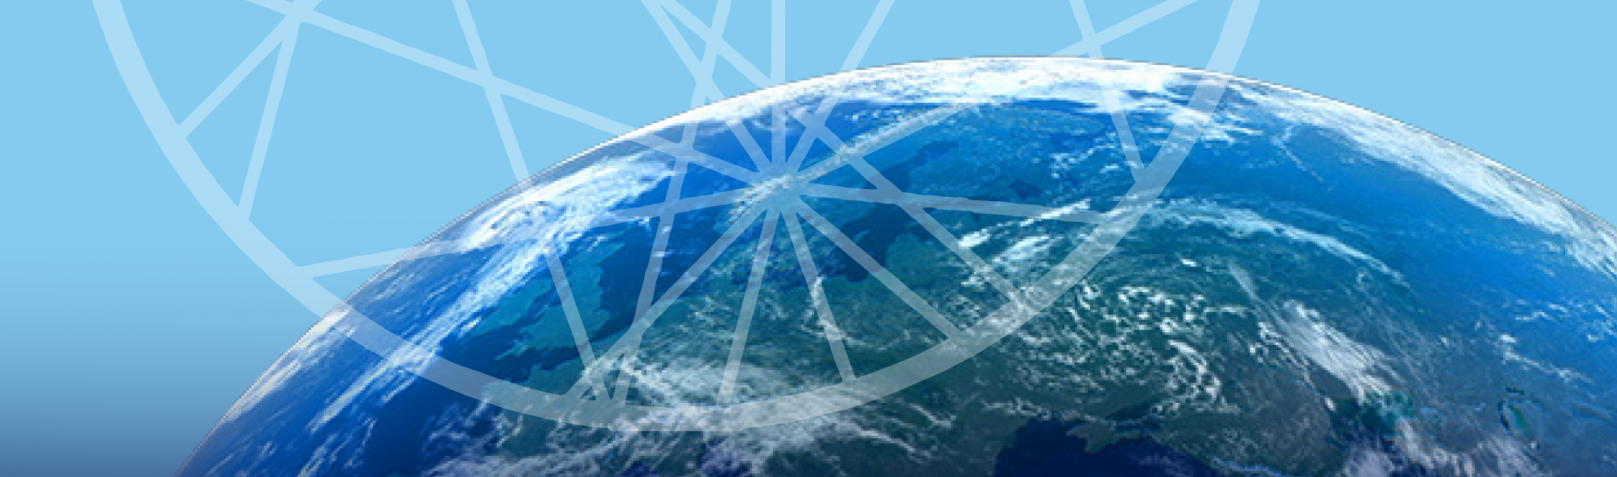 AC4 Logo over a globe